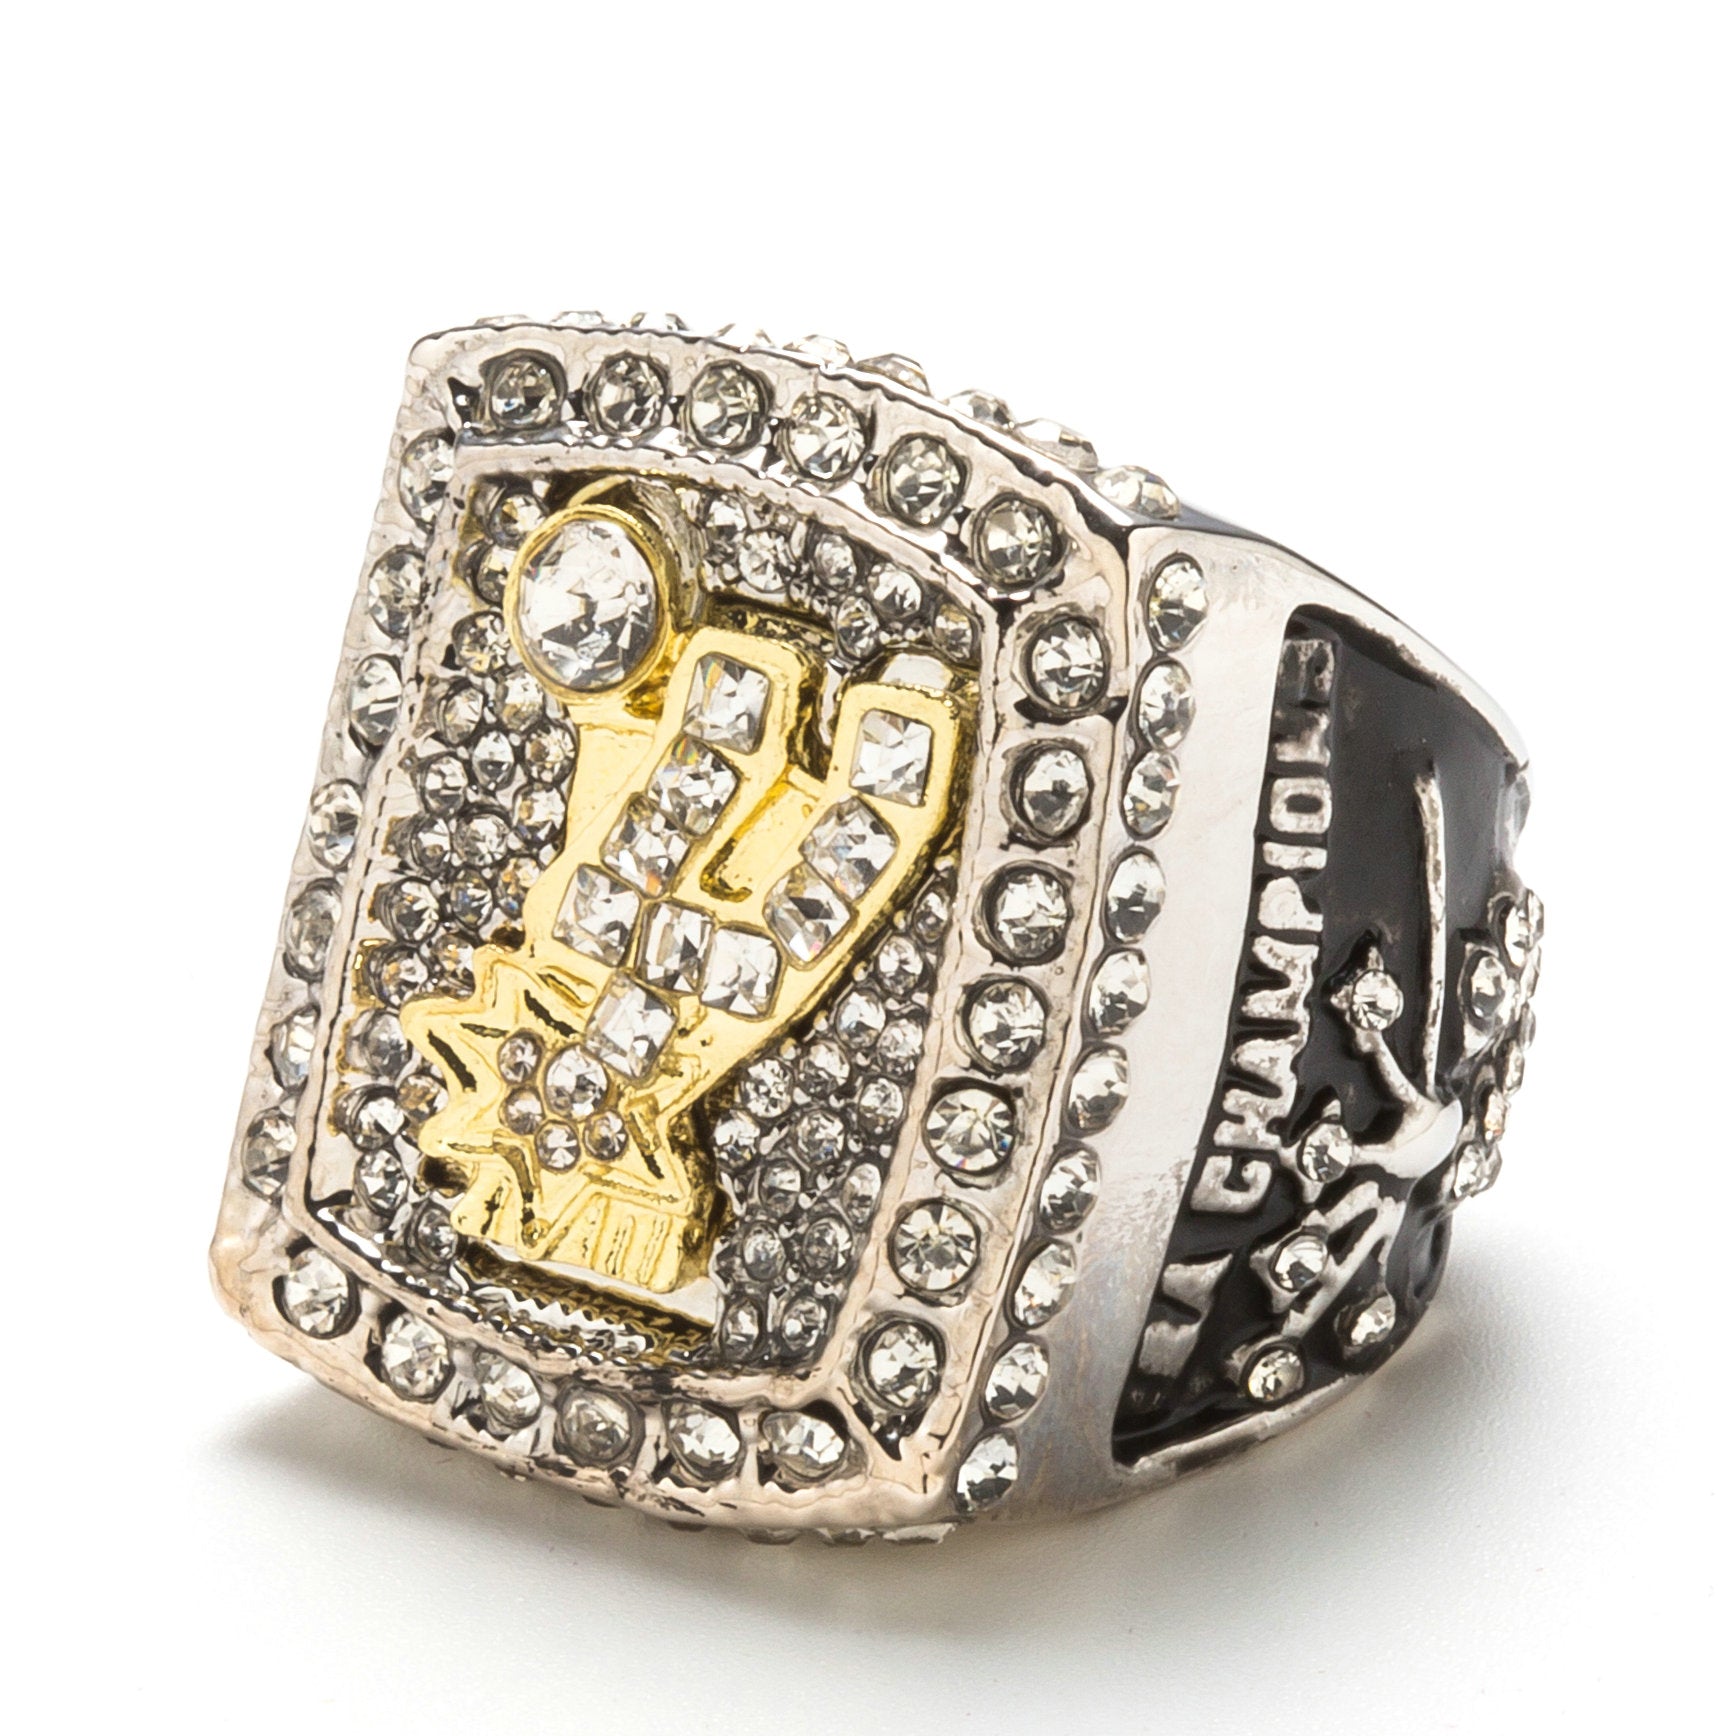 2014 San Antonio Spurs NBA Championship Ring – Best Championship Rings